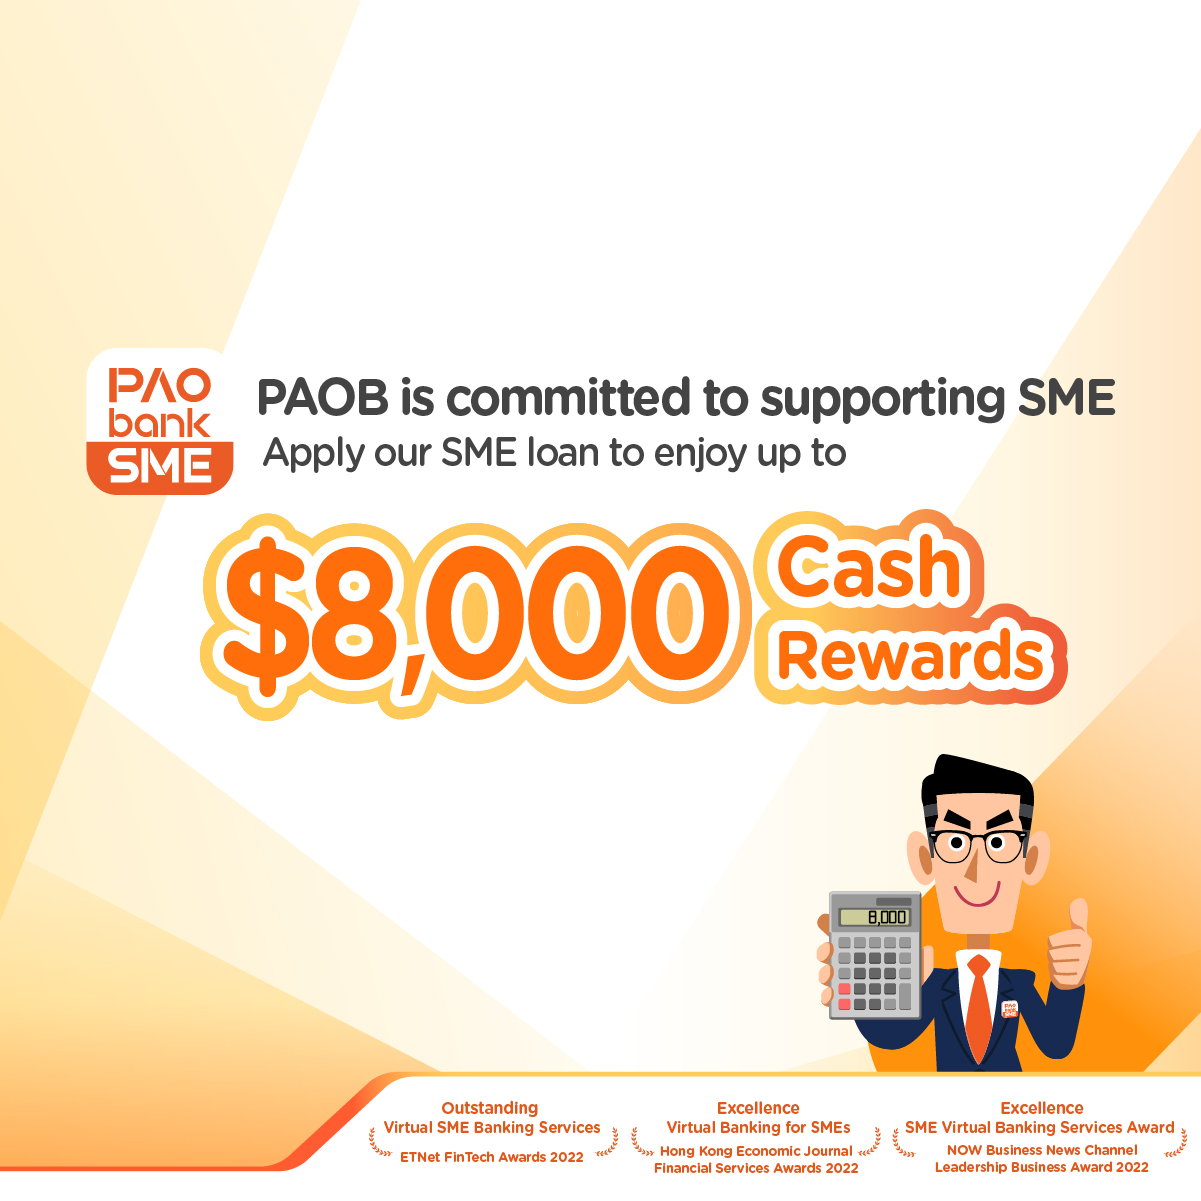 PAOB SME Loan Cash Reward Offer